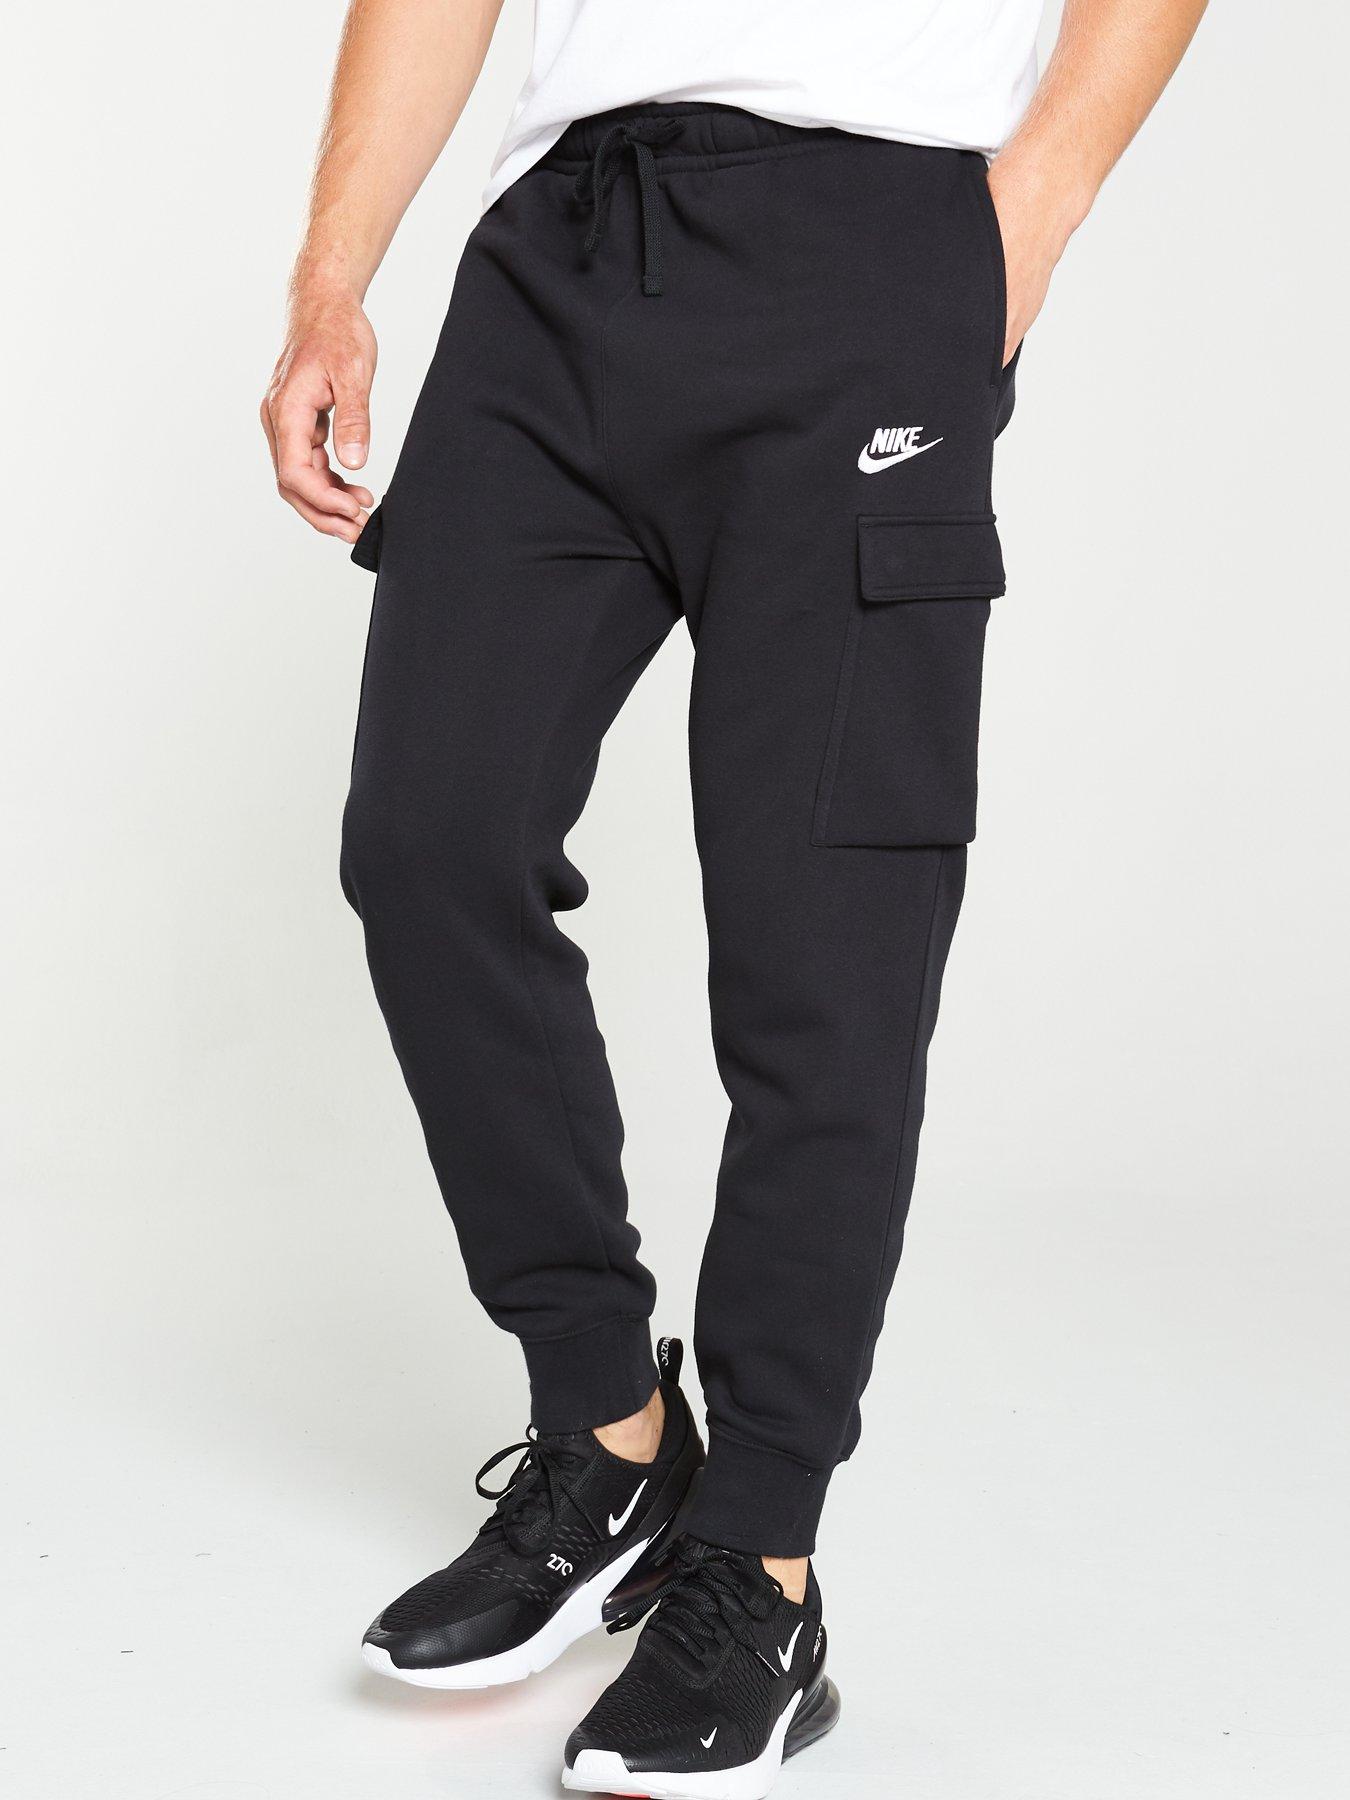 Nike Just Do It Tab Sweatpants in Black for Men